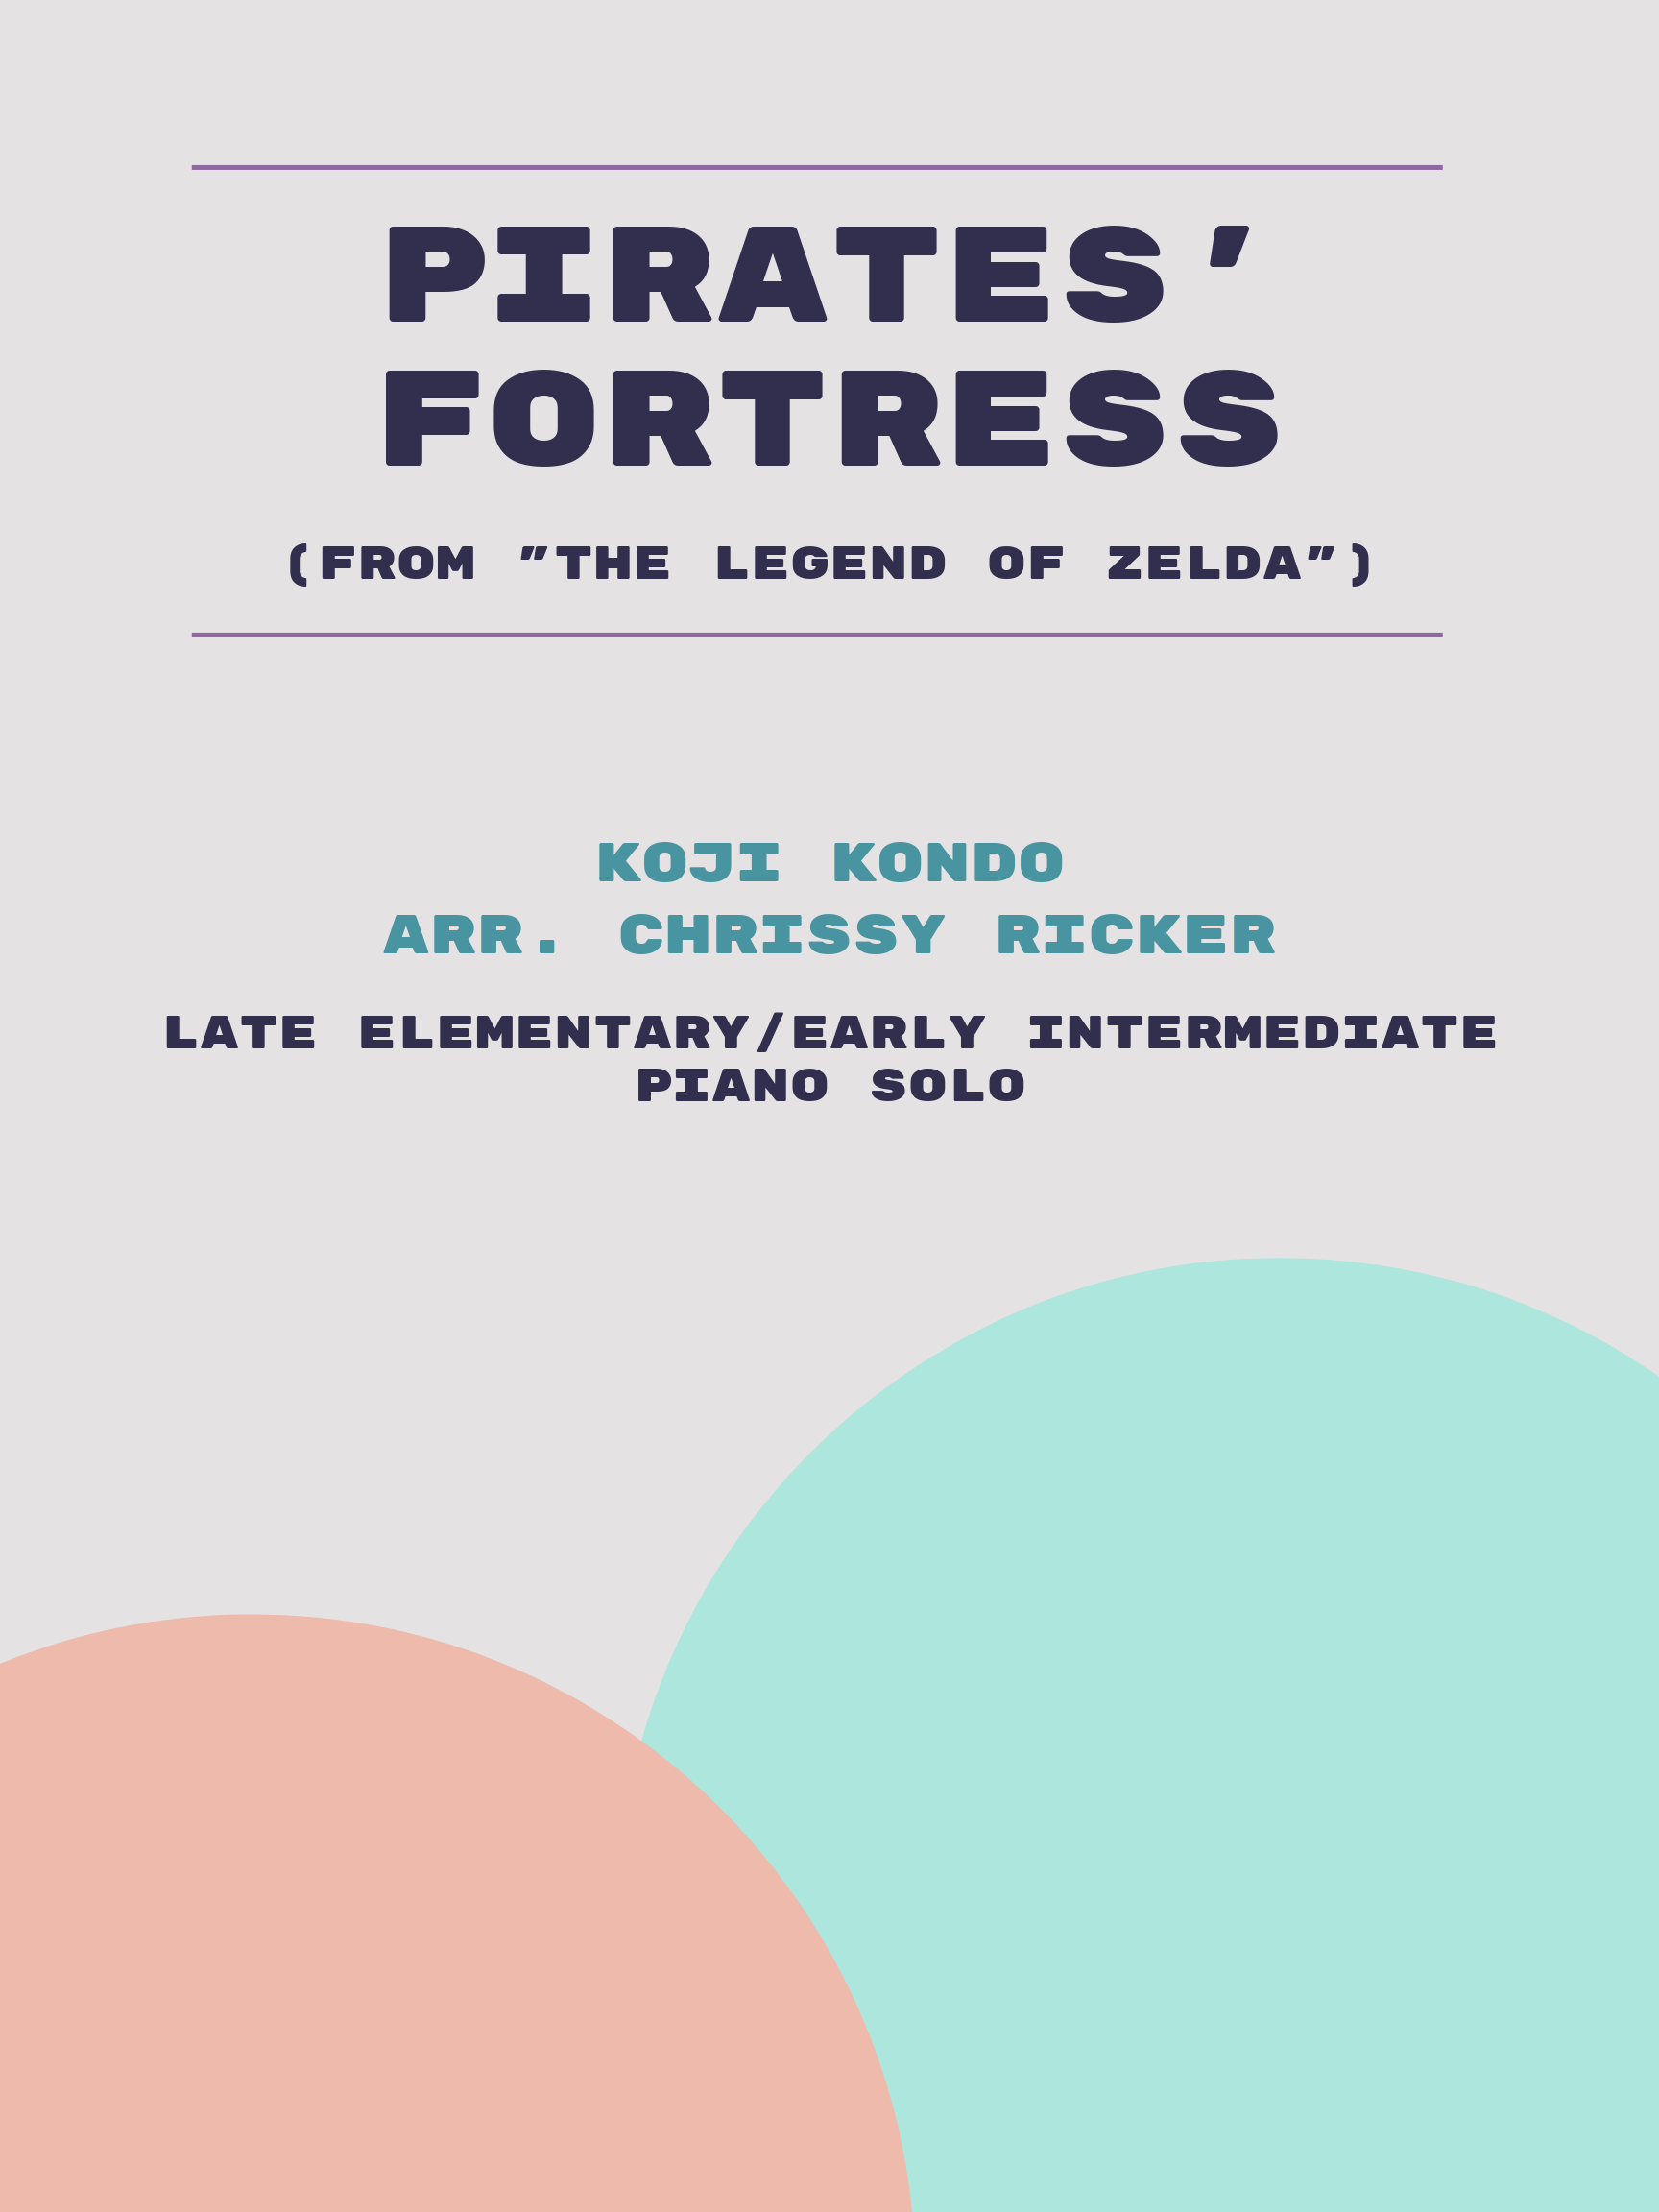 Pirates' Fortress by Koji Kondo